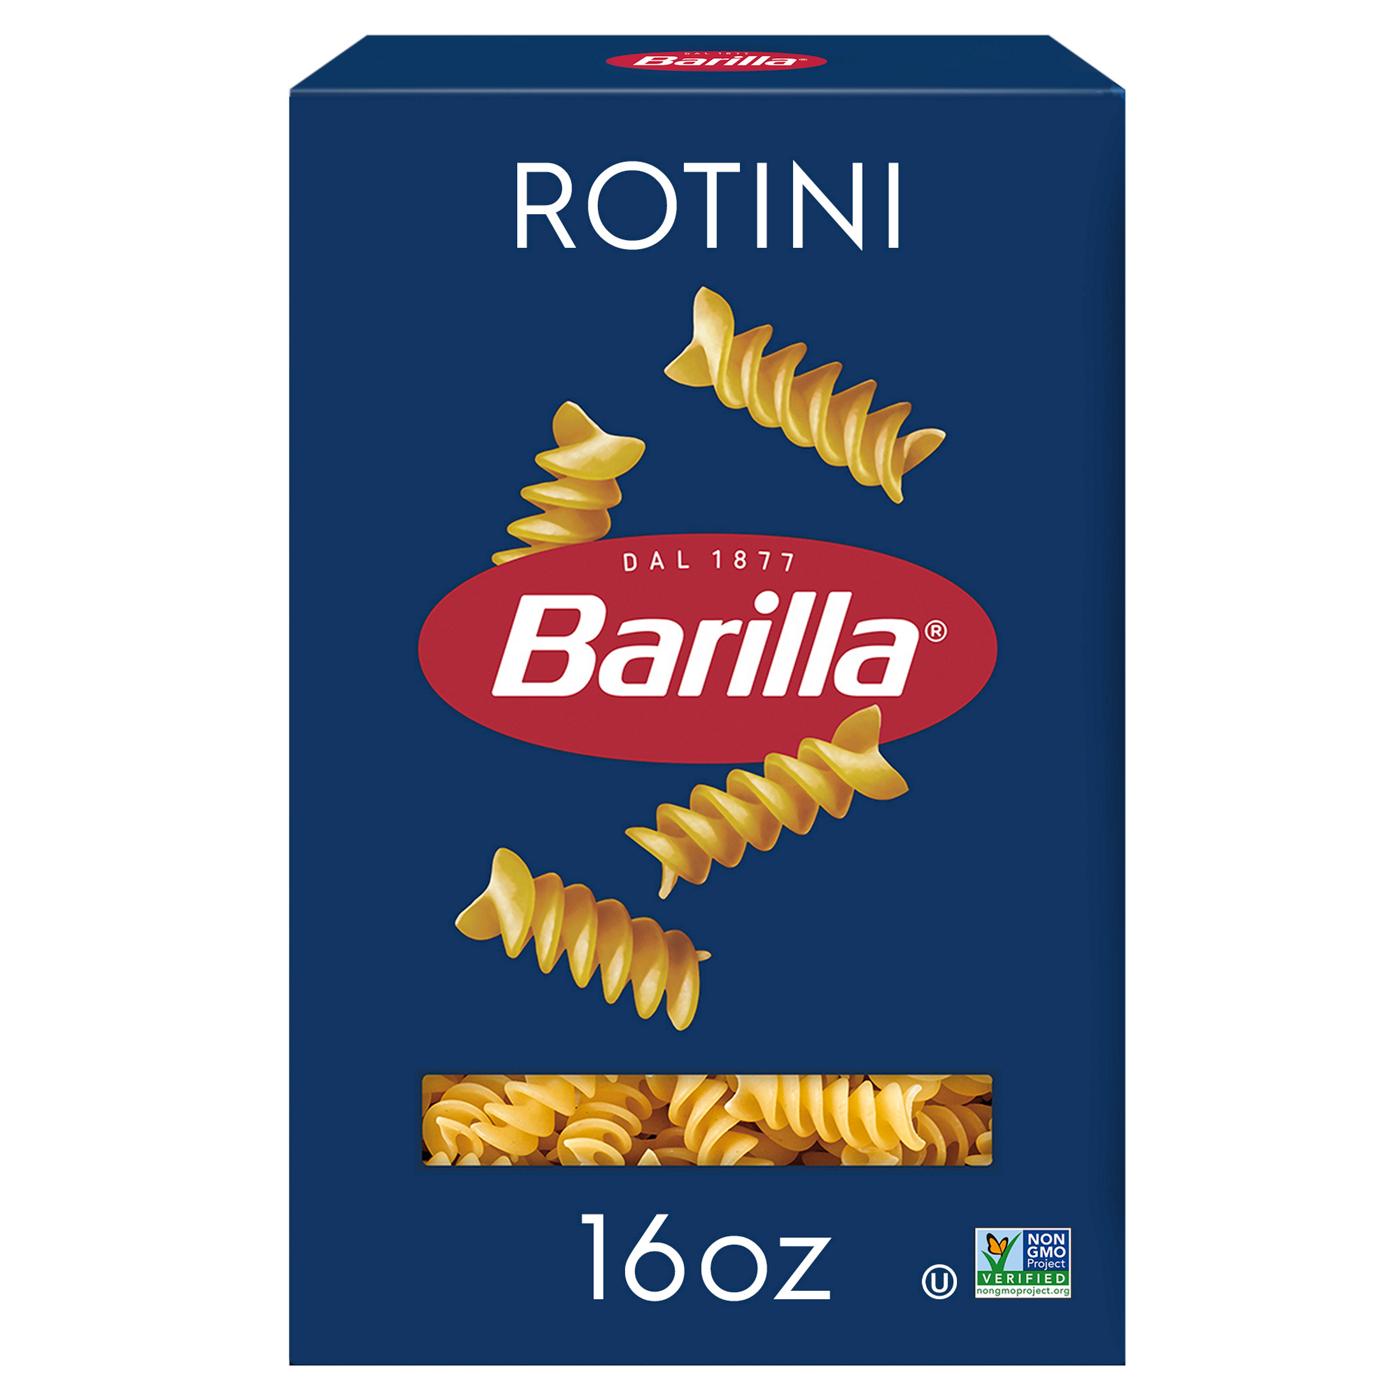 Barilla Rotini Pasta; image 1 of 6